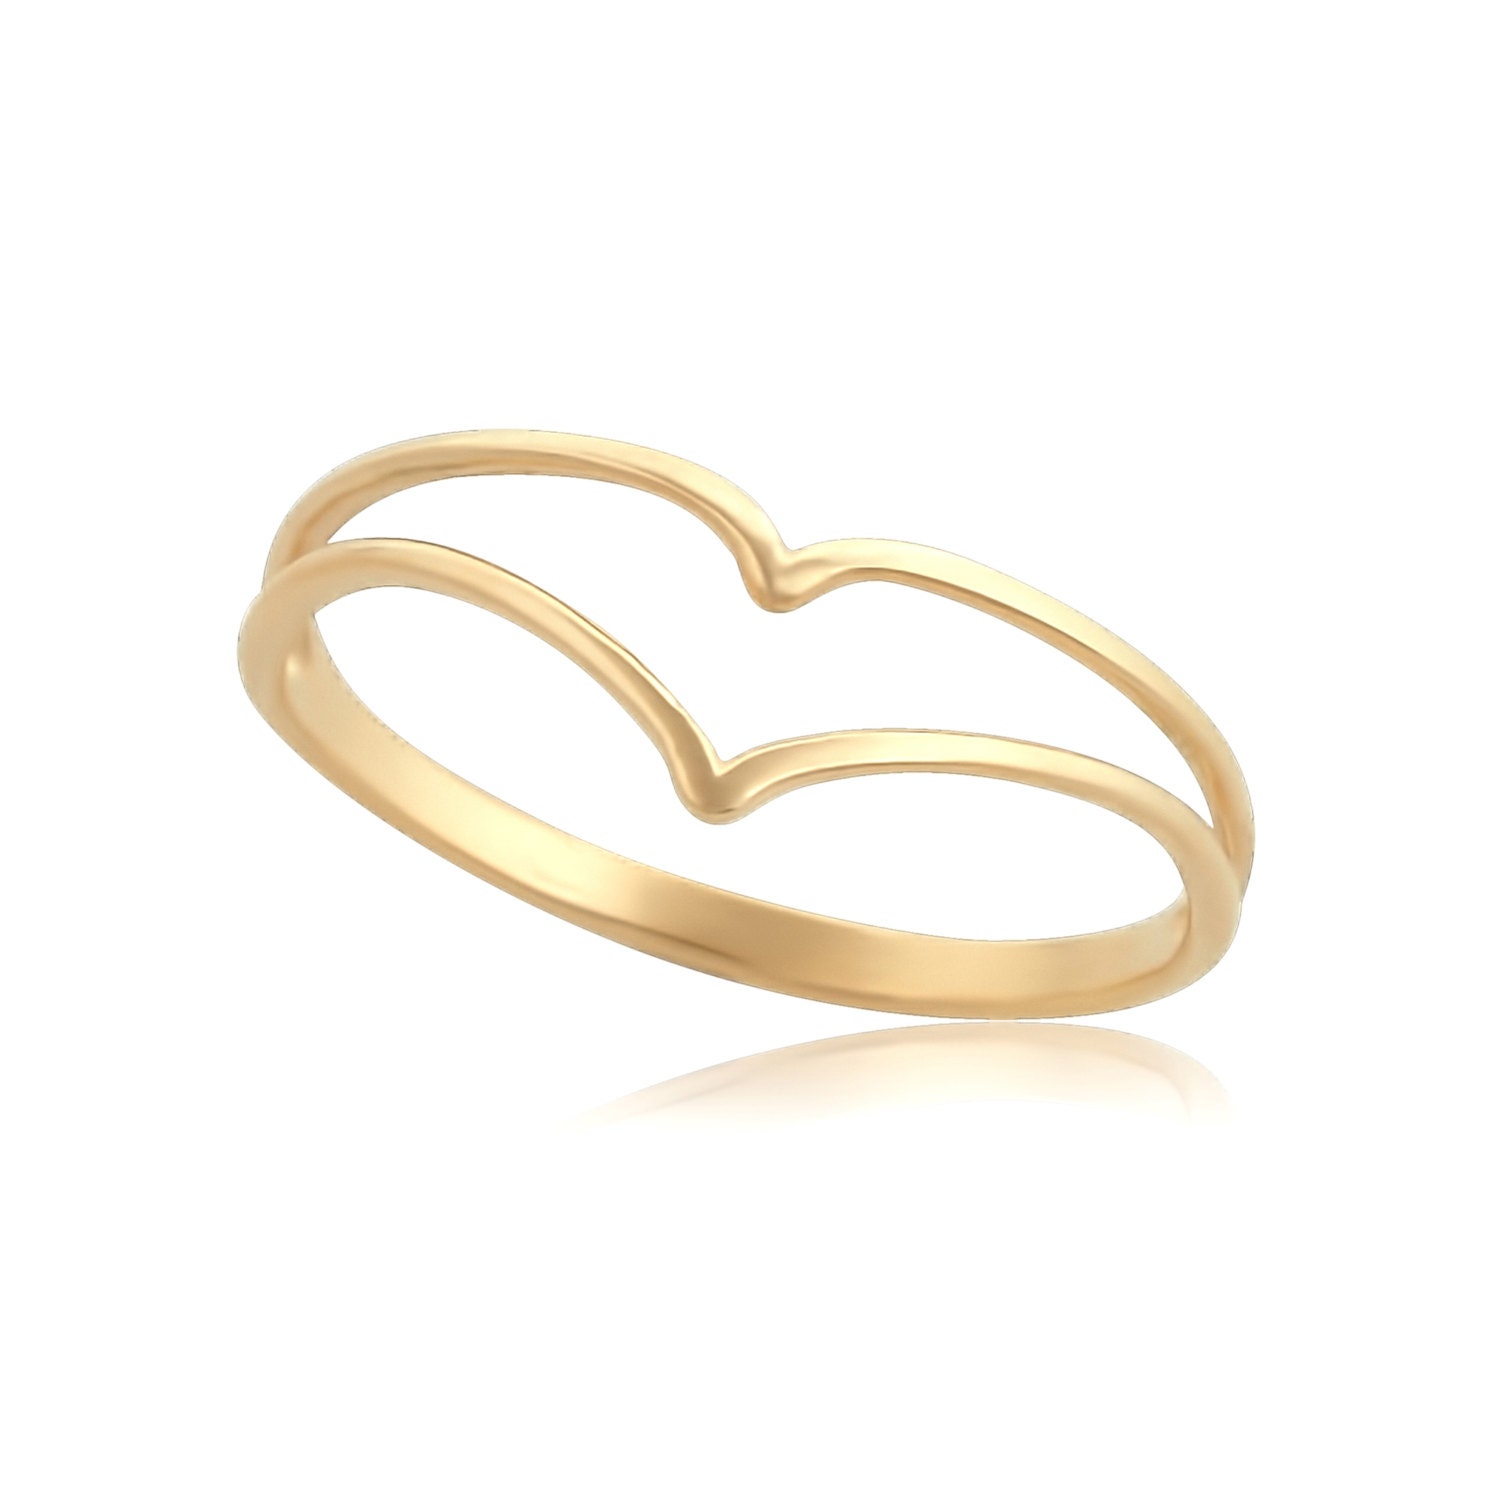 Gold Chevron Ring Double Ring V Shaped Ring Thin Ring Gold - Etsy